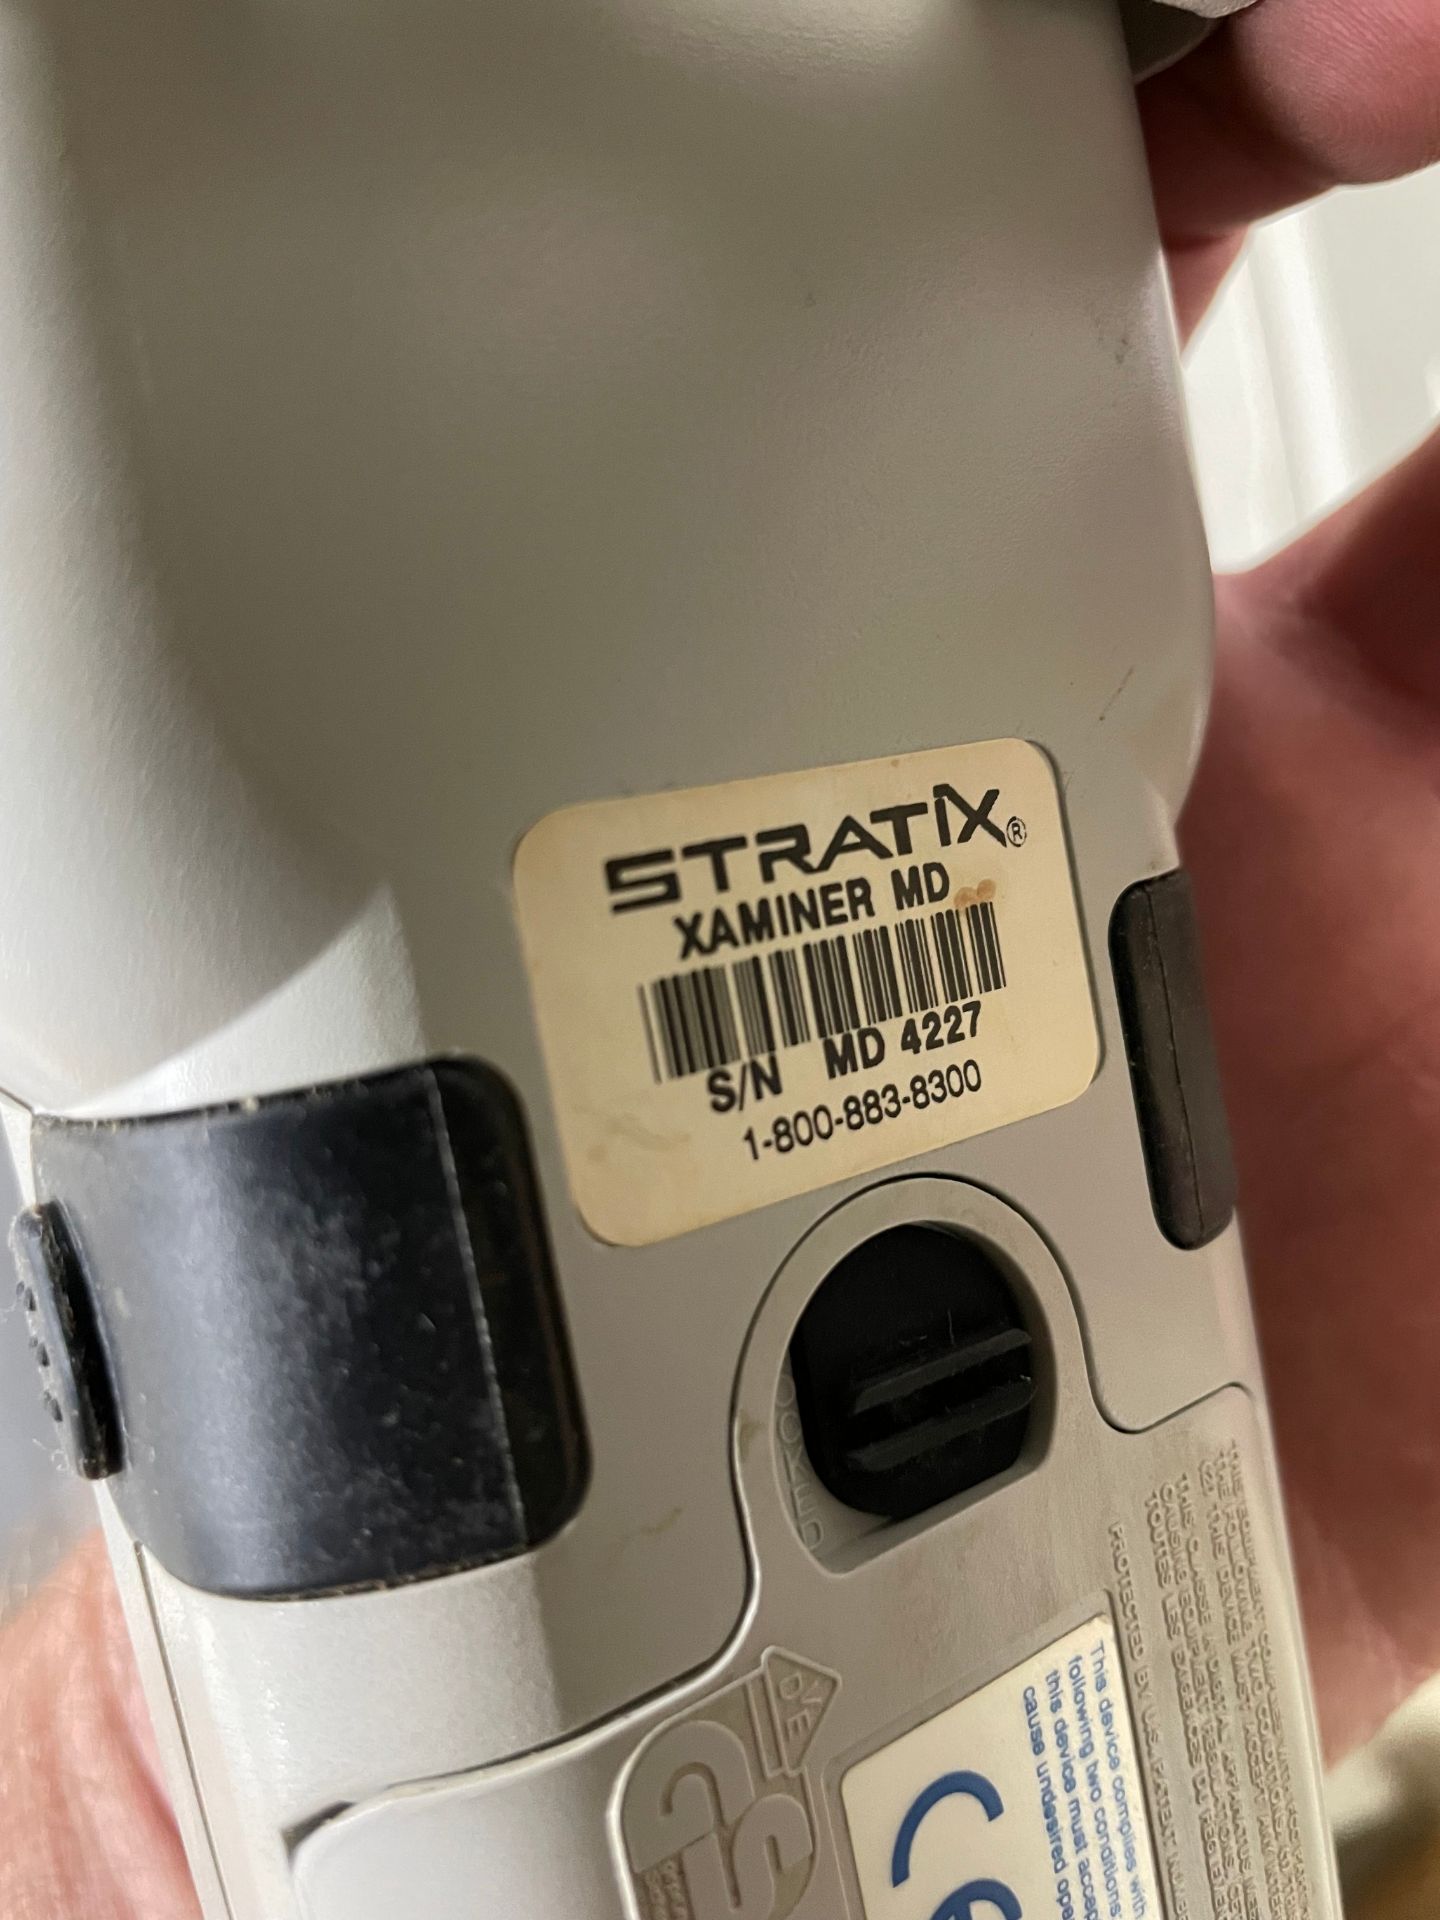 Stratix Xaminer MD Bar Code Checking Device - Image 3 of 5